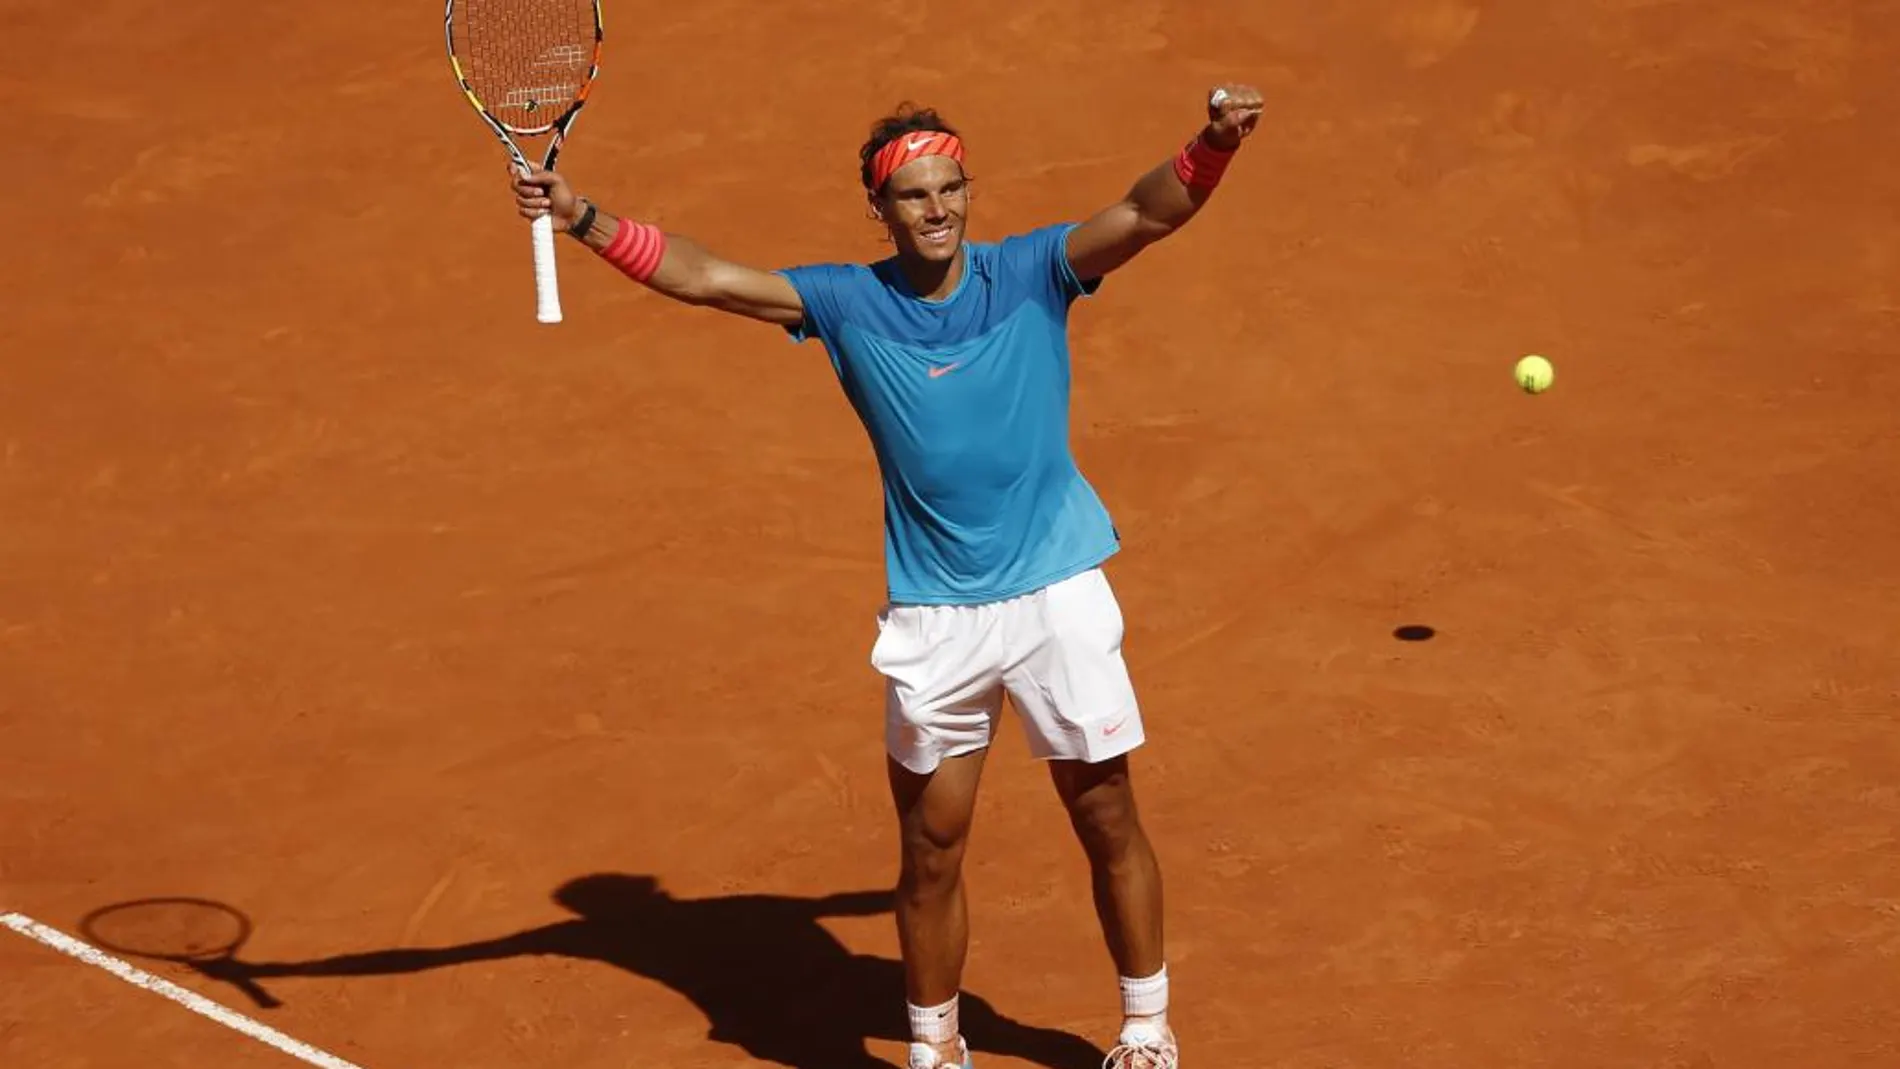 Rafa Nadal celebra su victoria de semifinales frente a Berdych